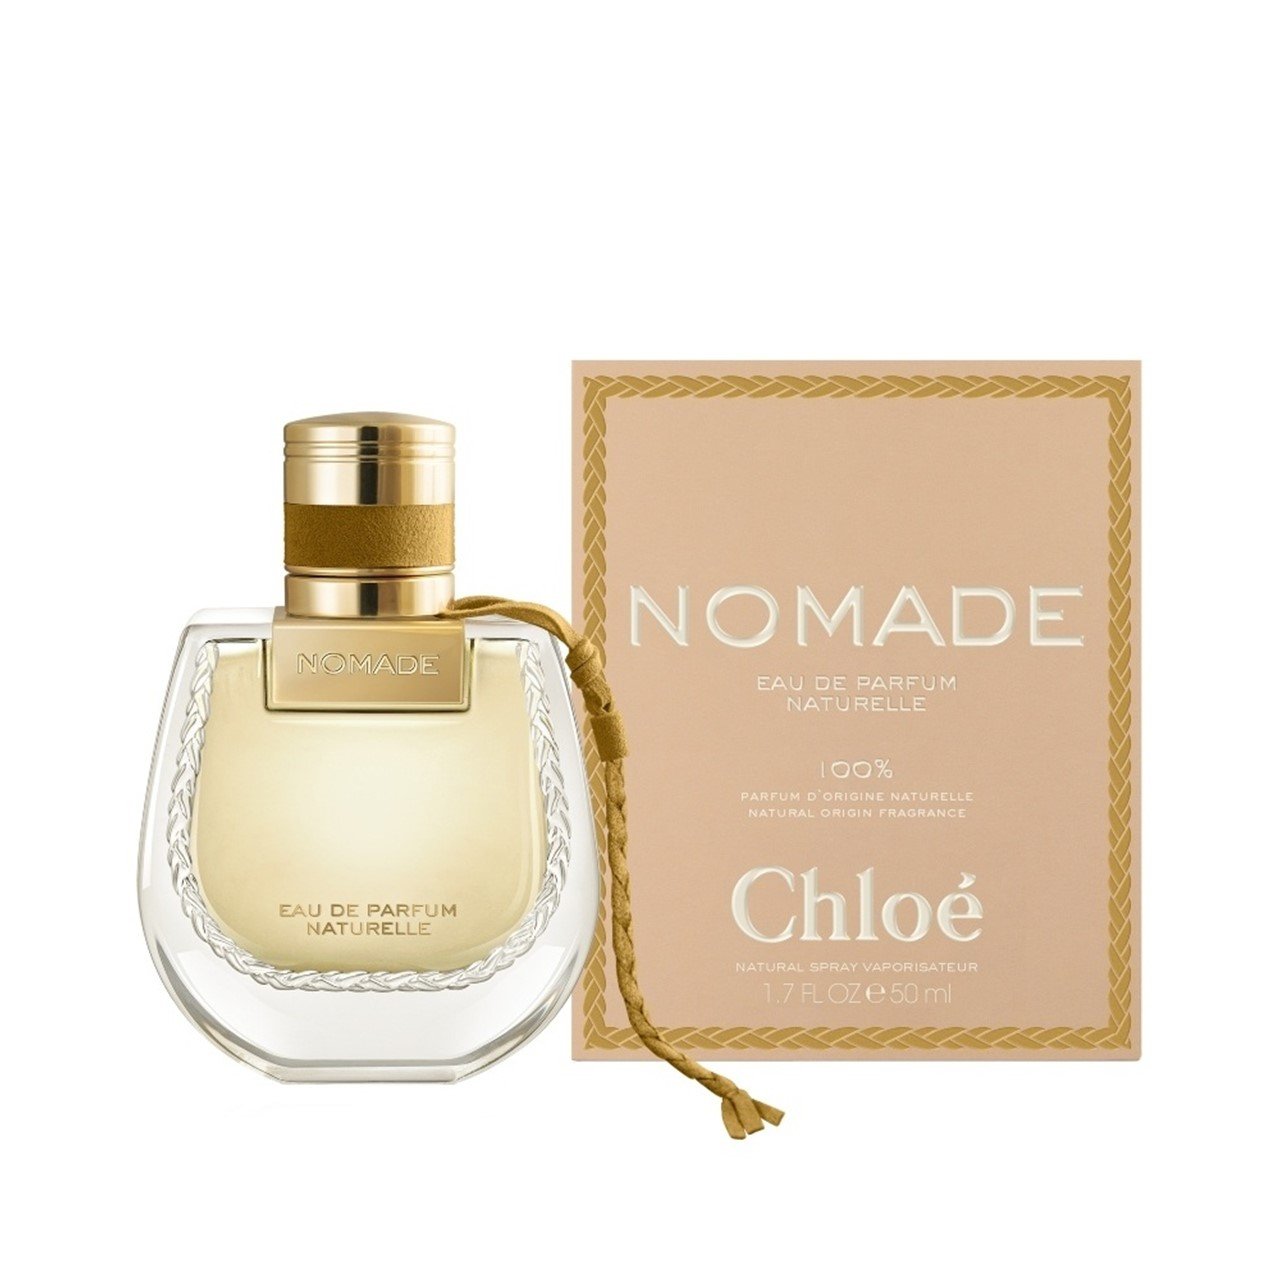 Buy Chloé Nomade Eau de Parfum Naturelle 50ml · USA